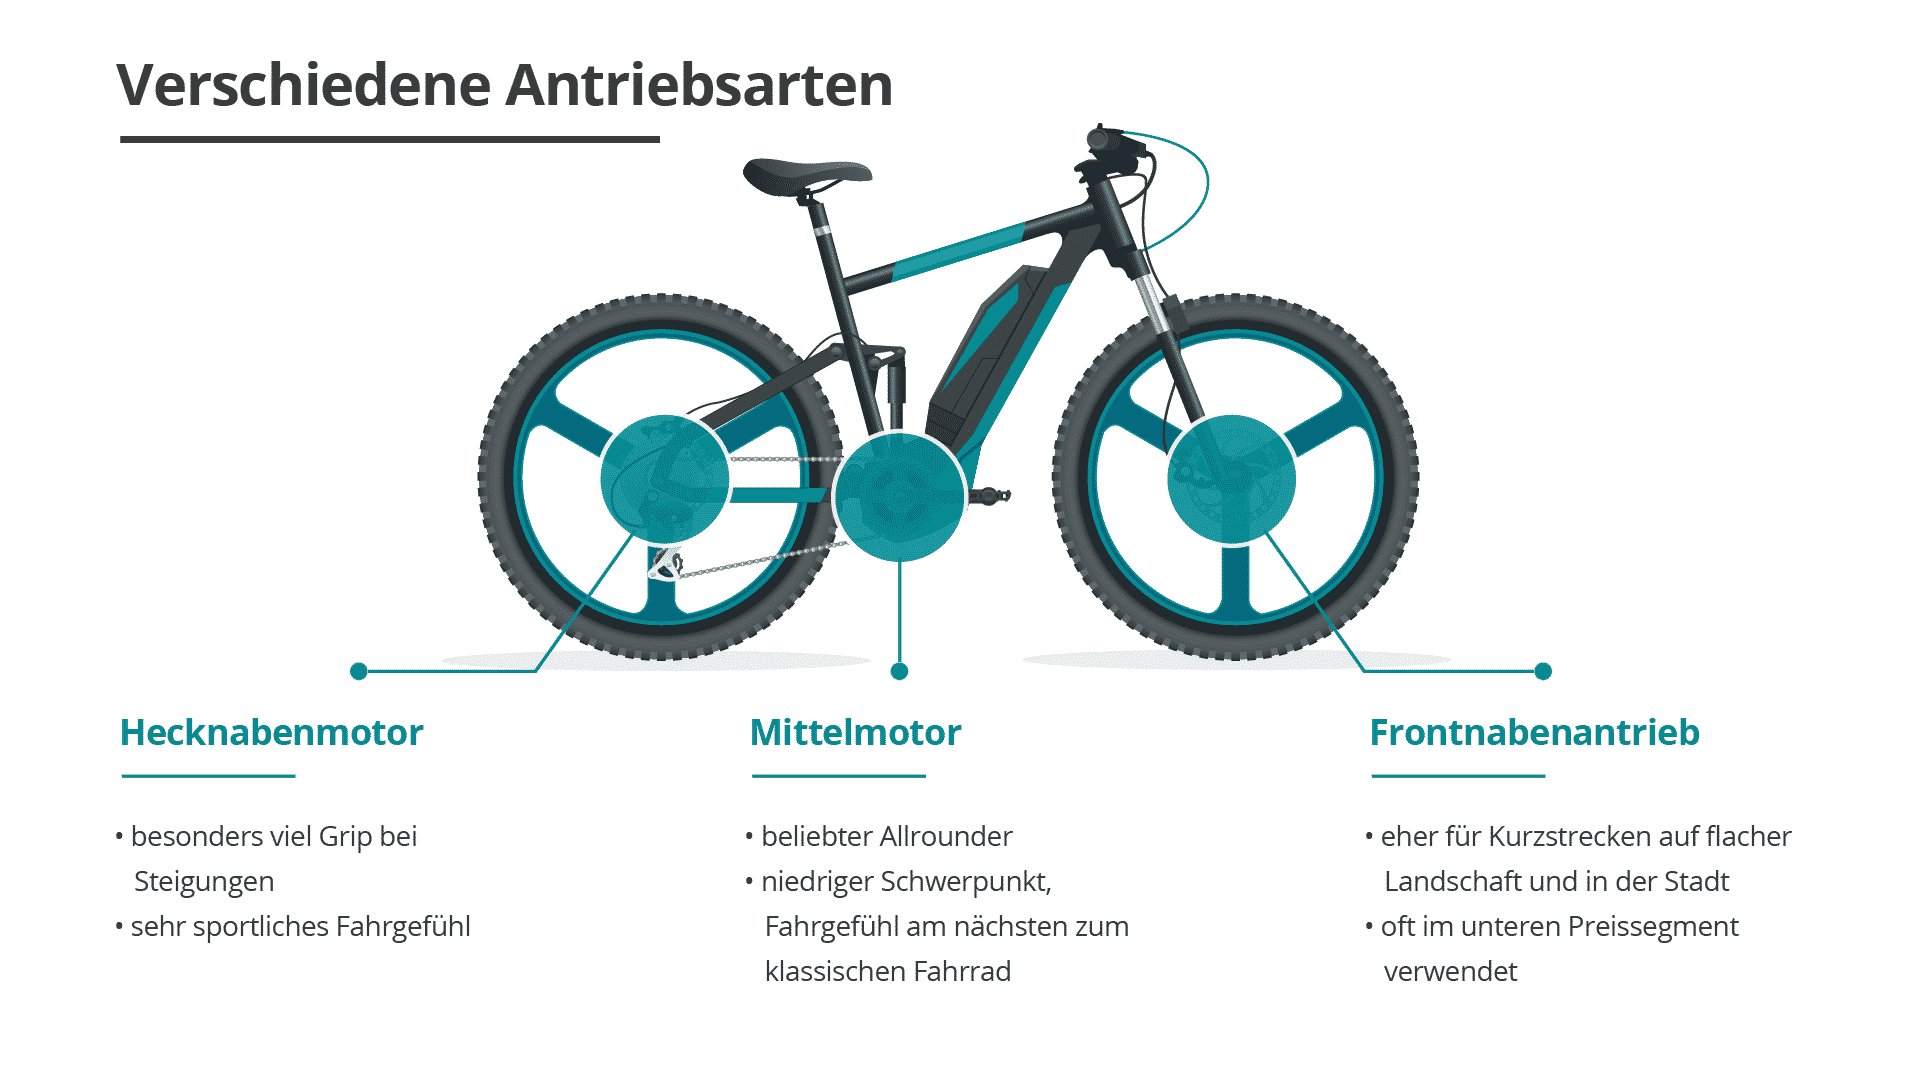 Antriebsarten Beitragsgrafik E-Bike